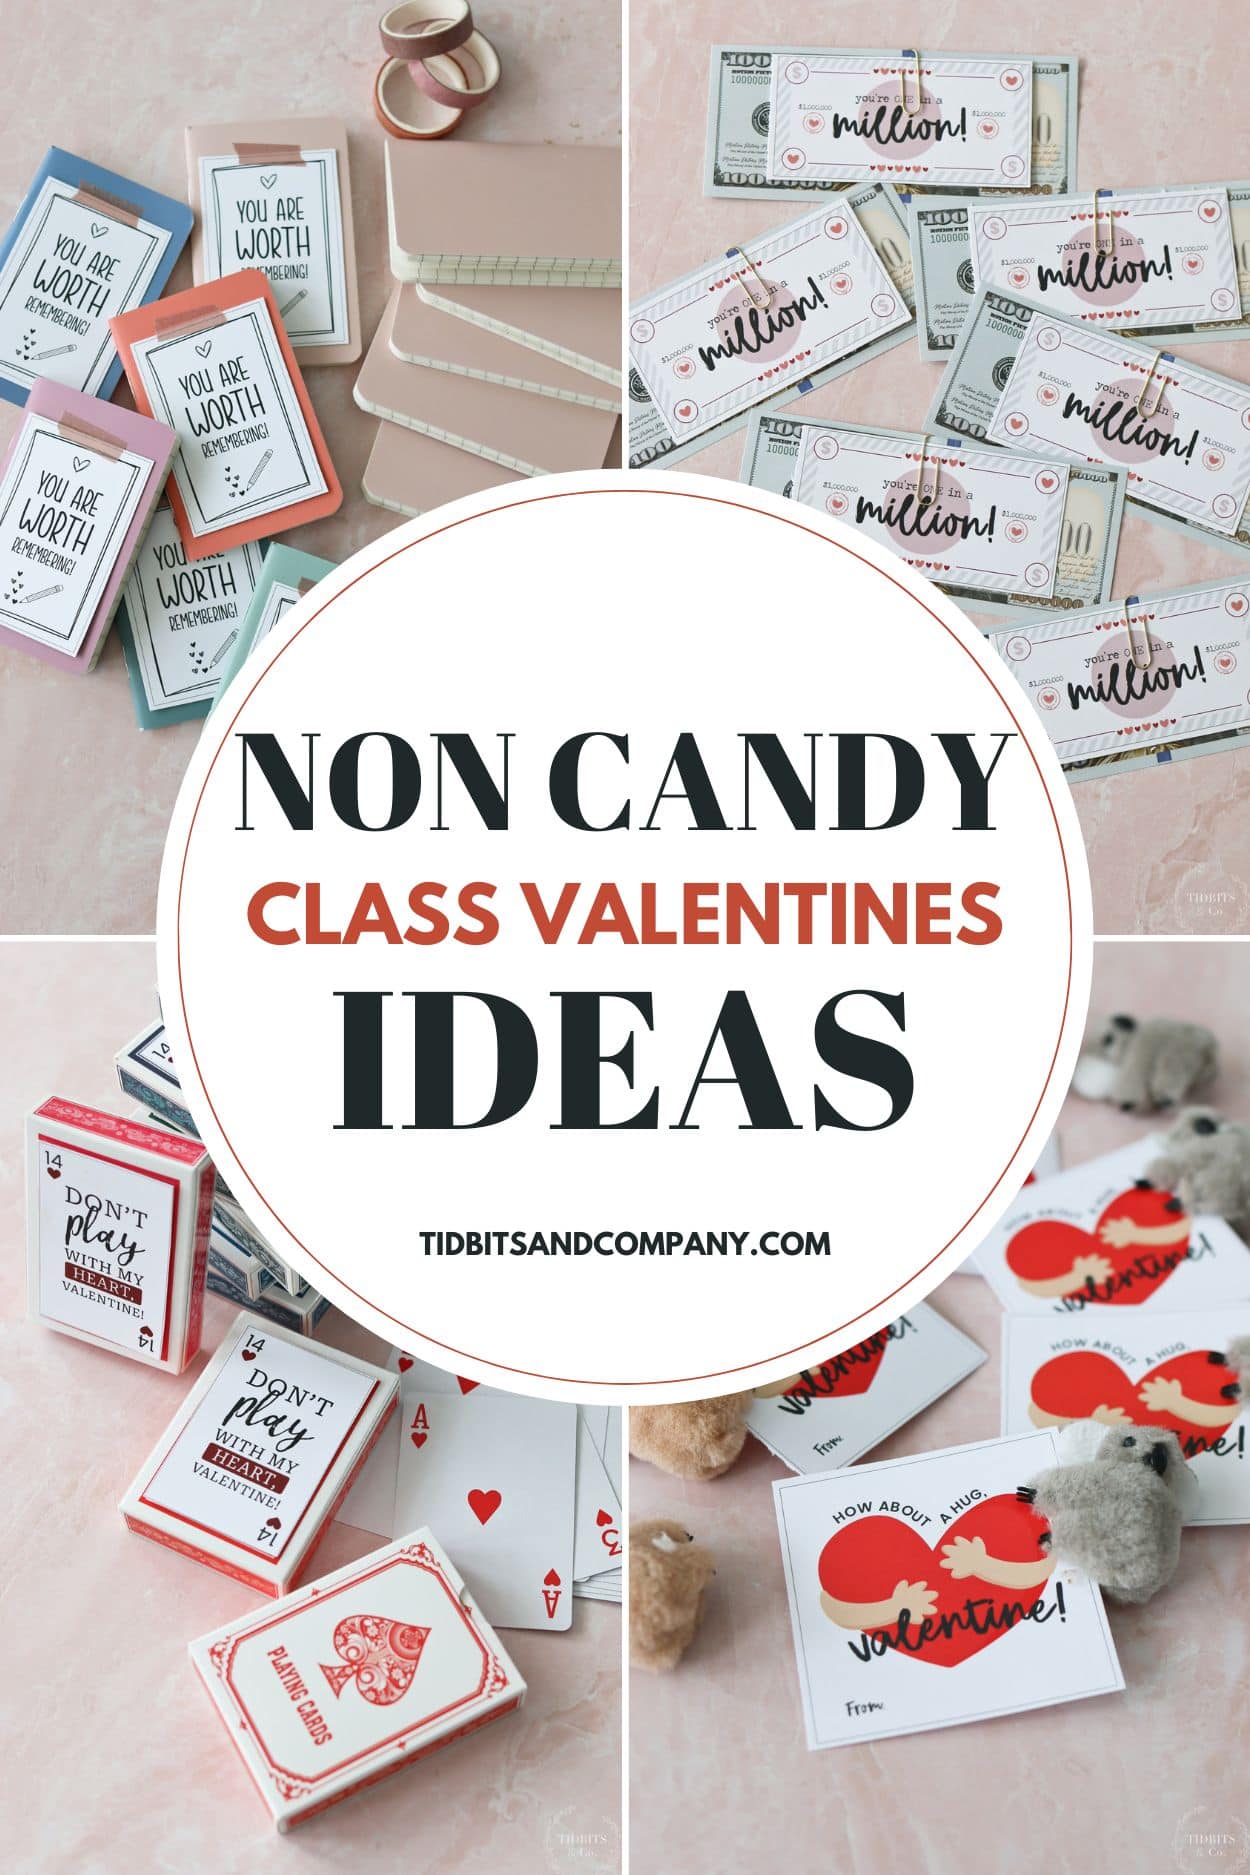 Non candy class valentine ideas for classmates